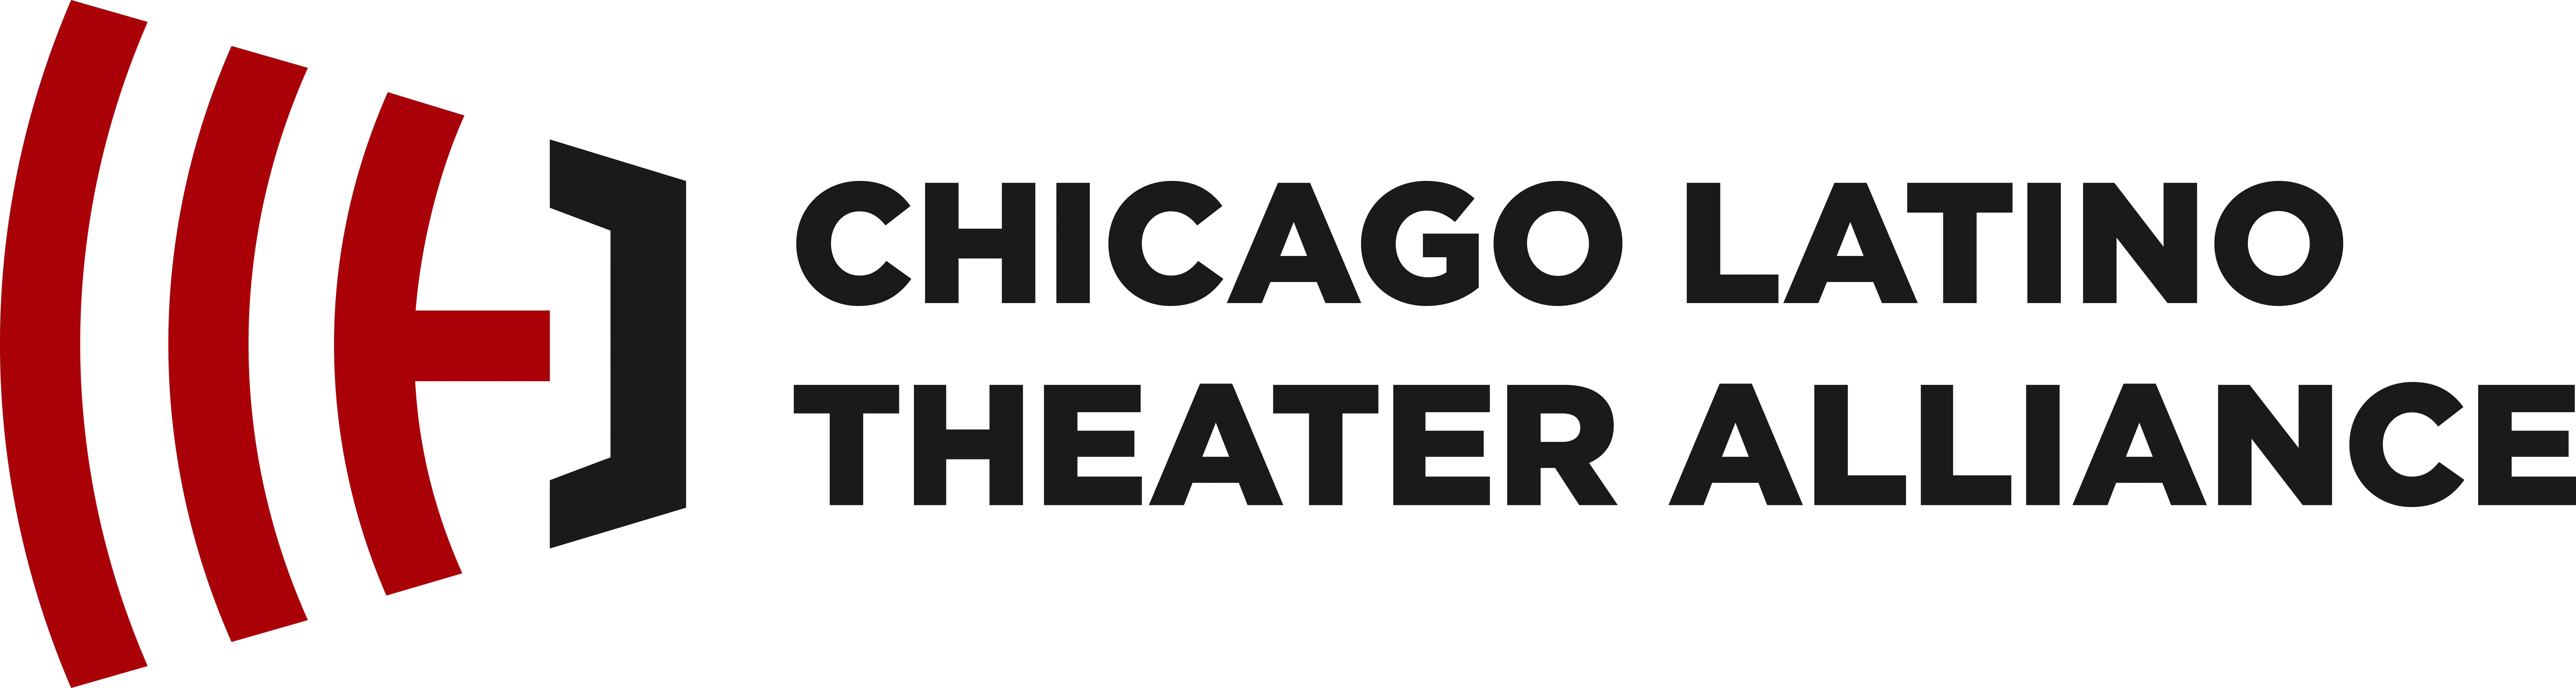 Chicago Latino Theater Alliance